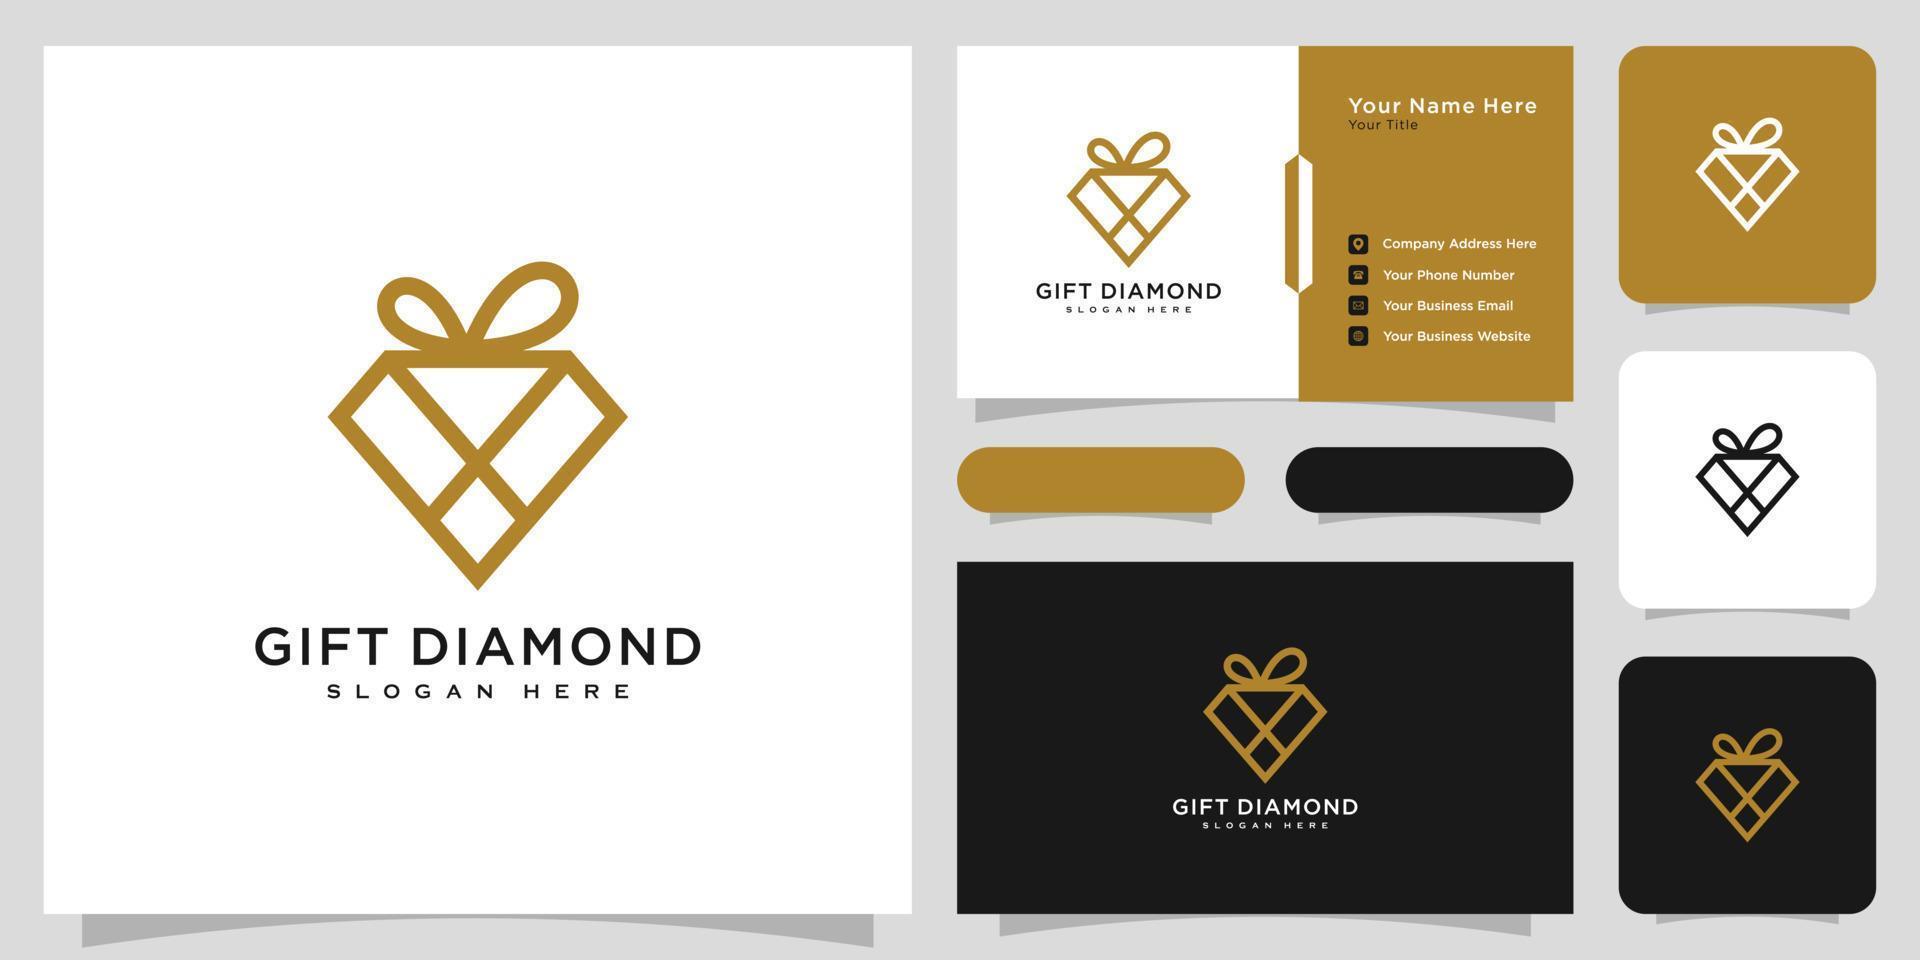 diamond gift logo vector design and business card